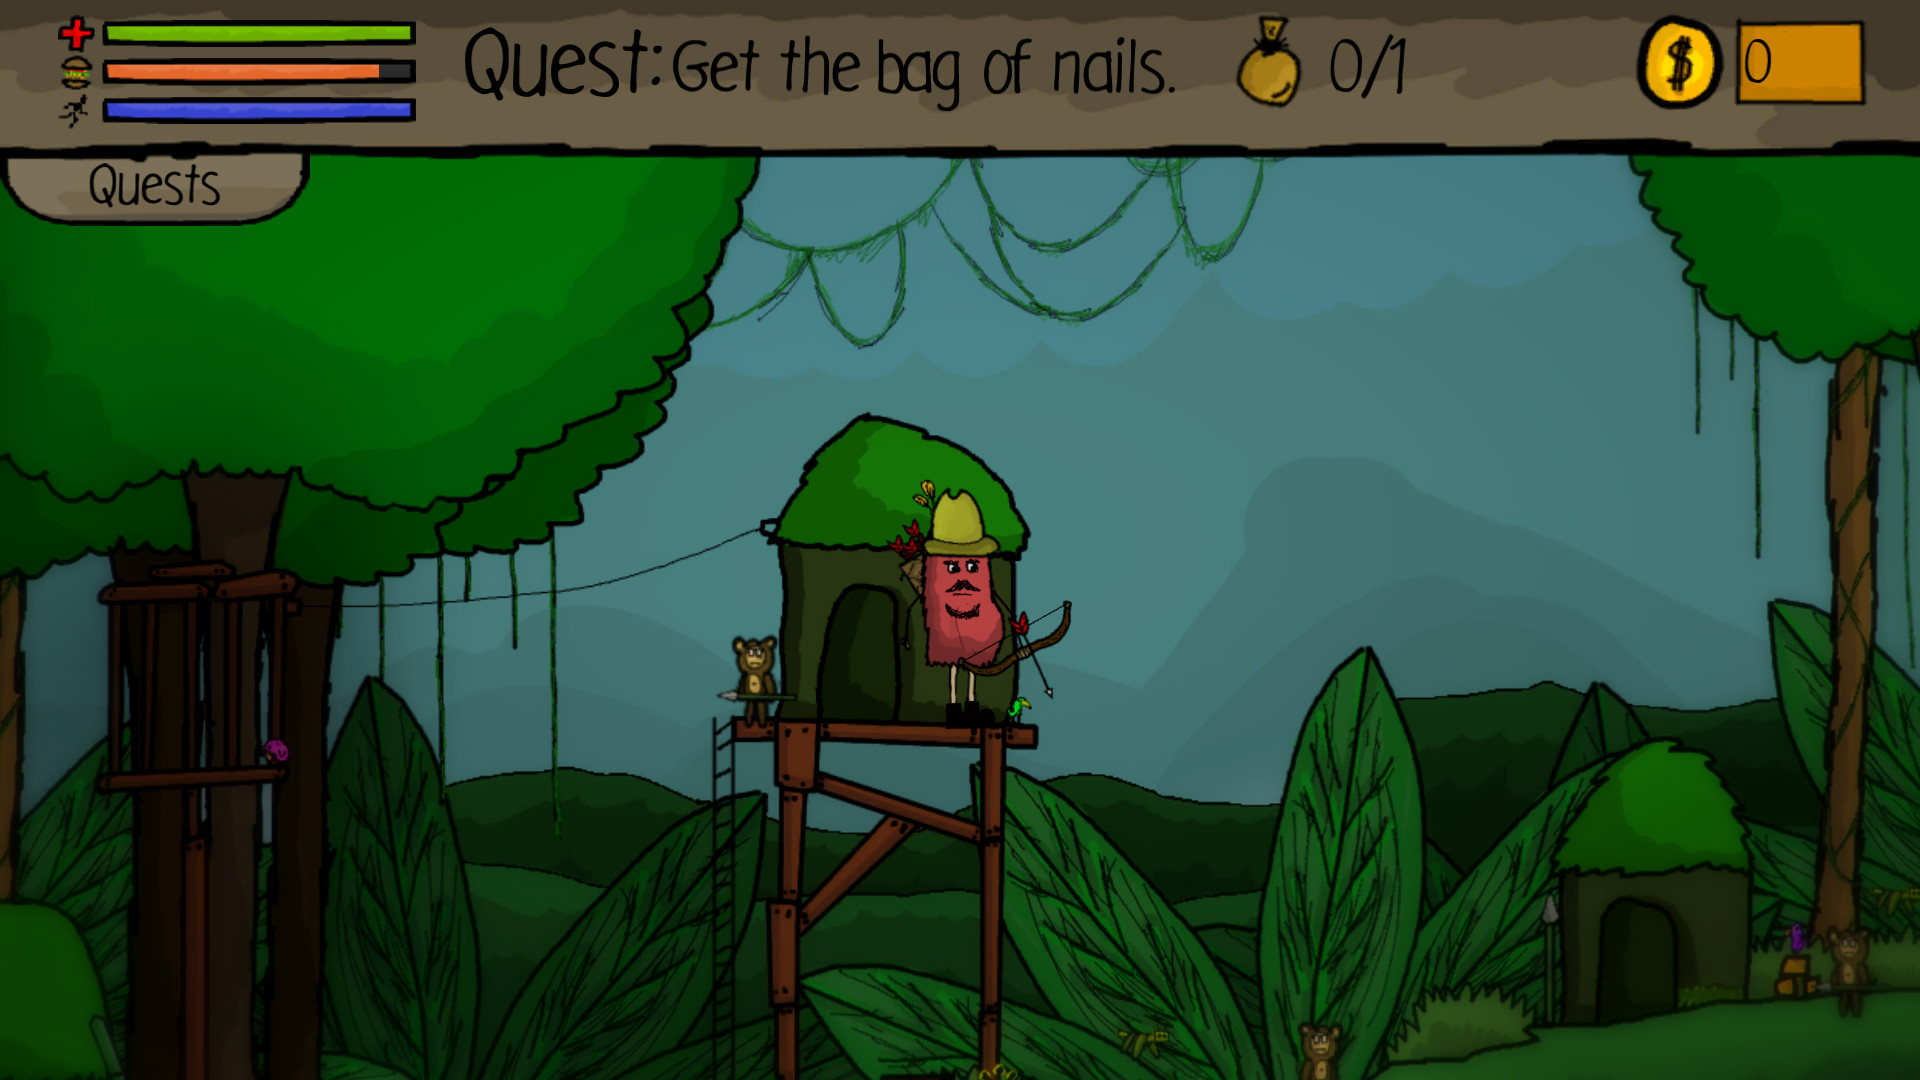 The Adventures of Tree screenshot